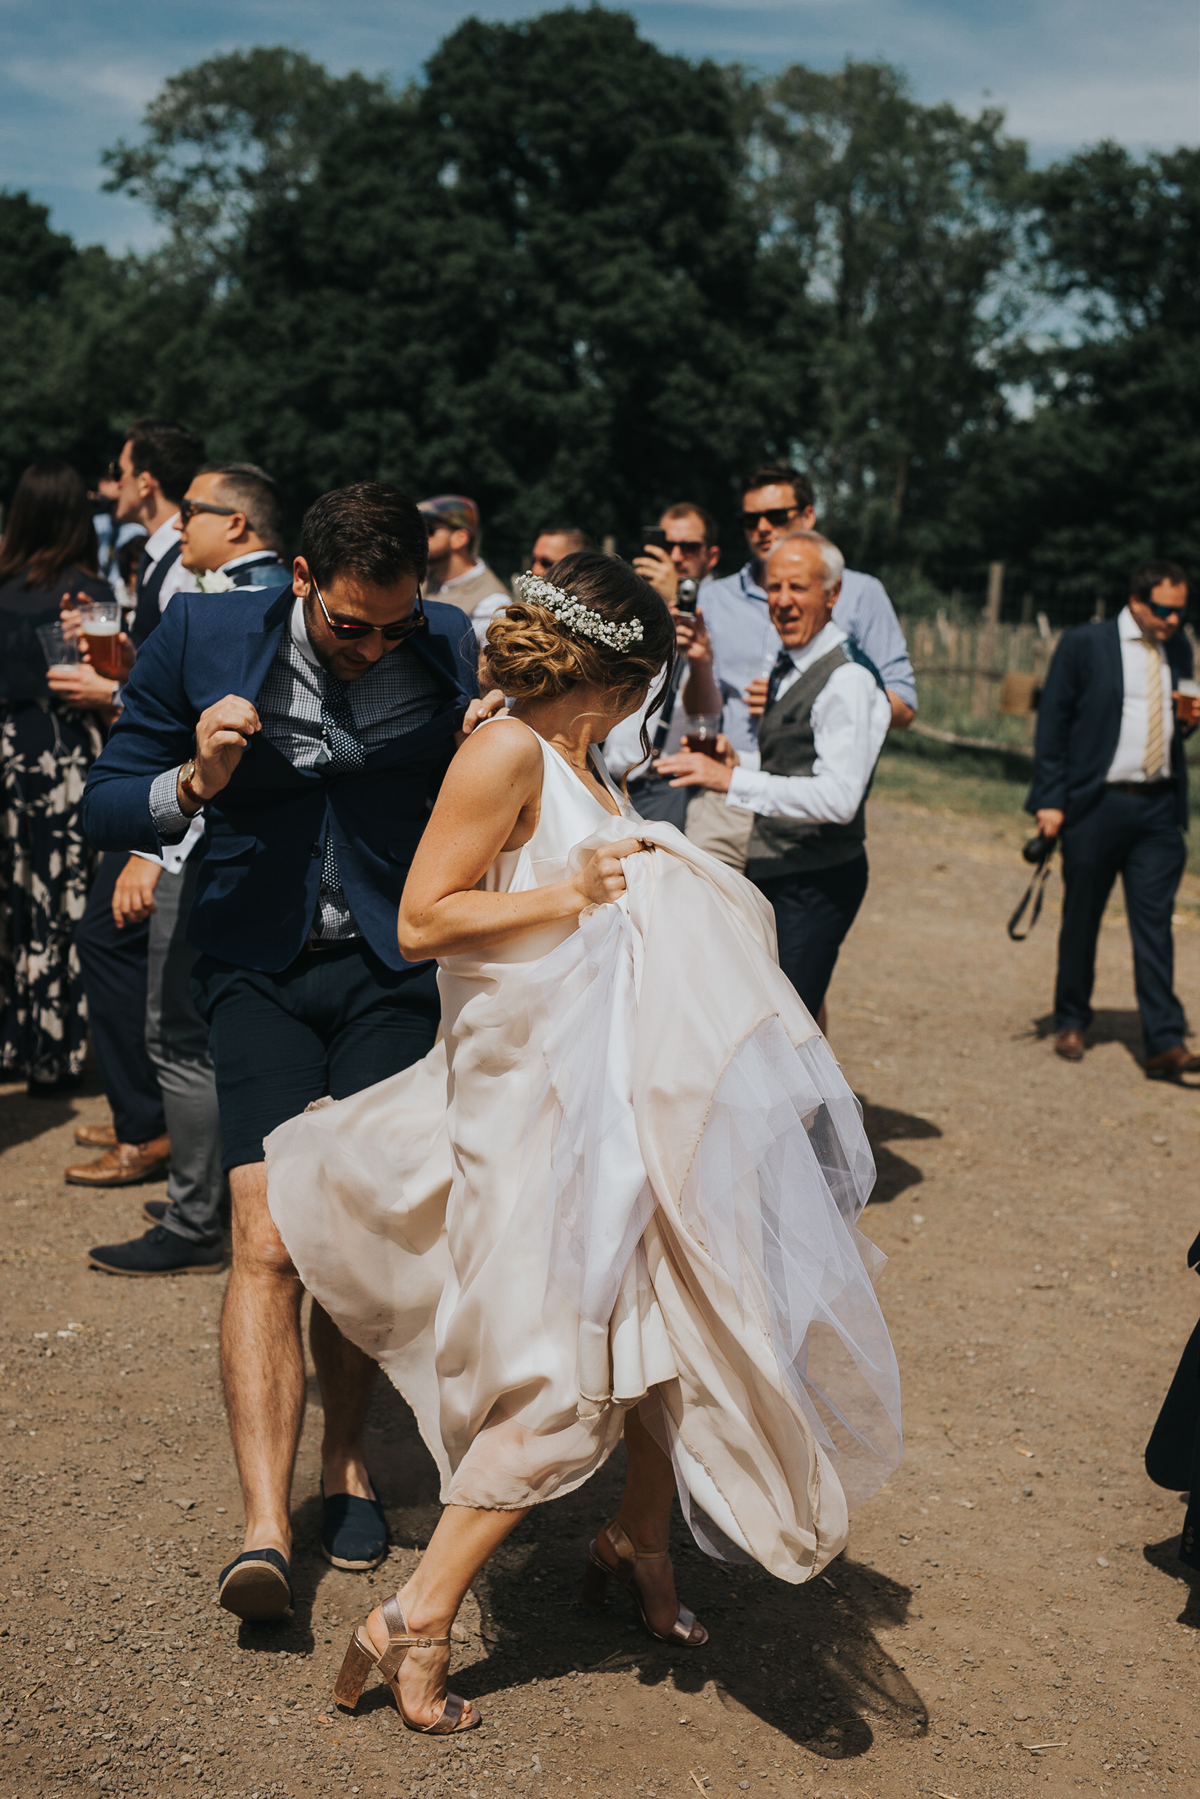 79 A cool festival inspired wedding on a farm